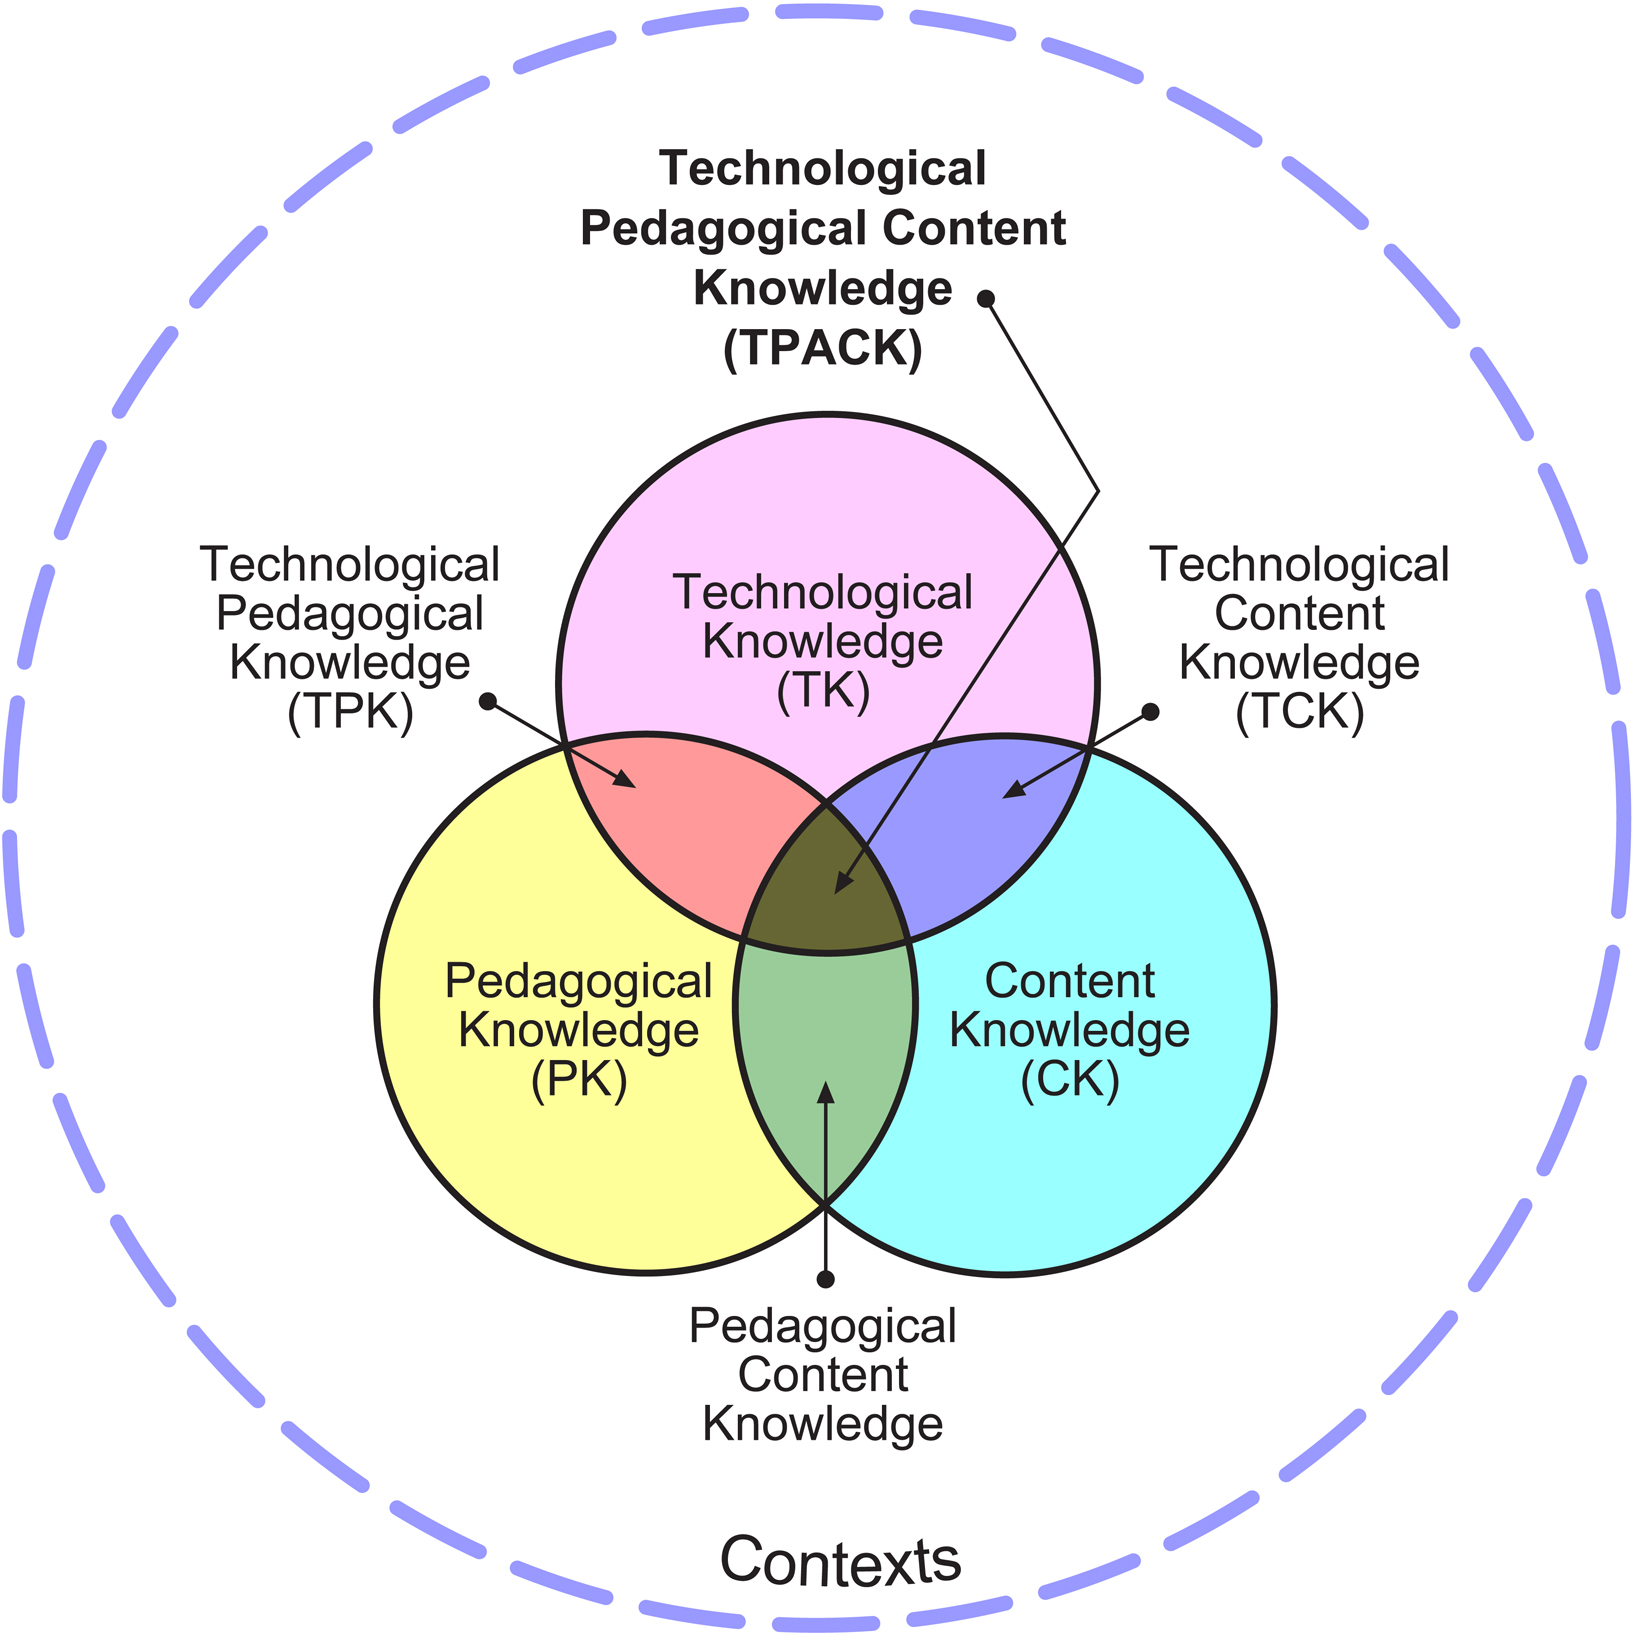 TPACK: Technological Pedagogical Content Knowledge Framework